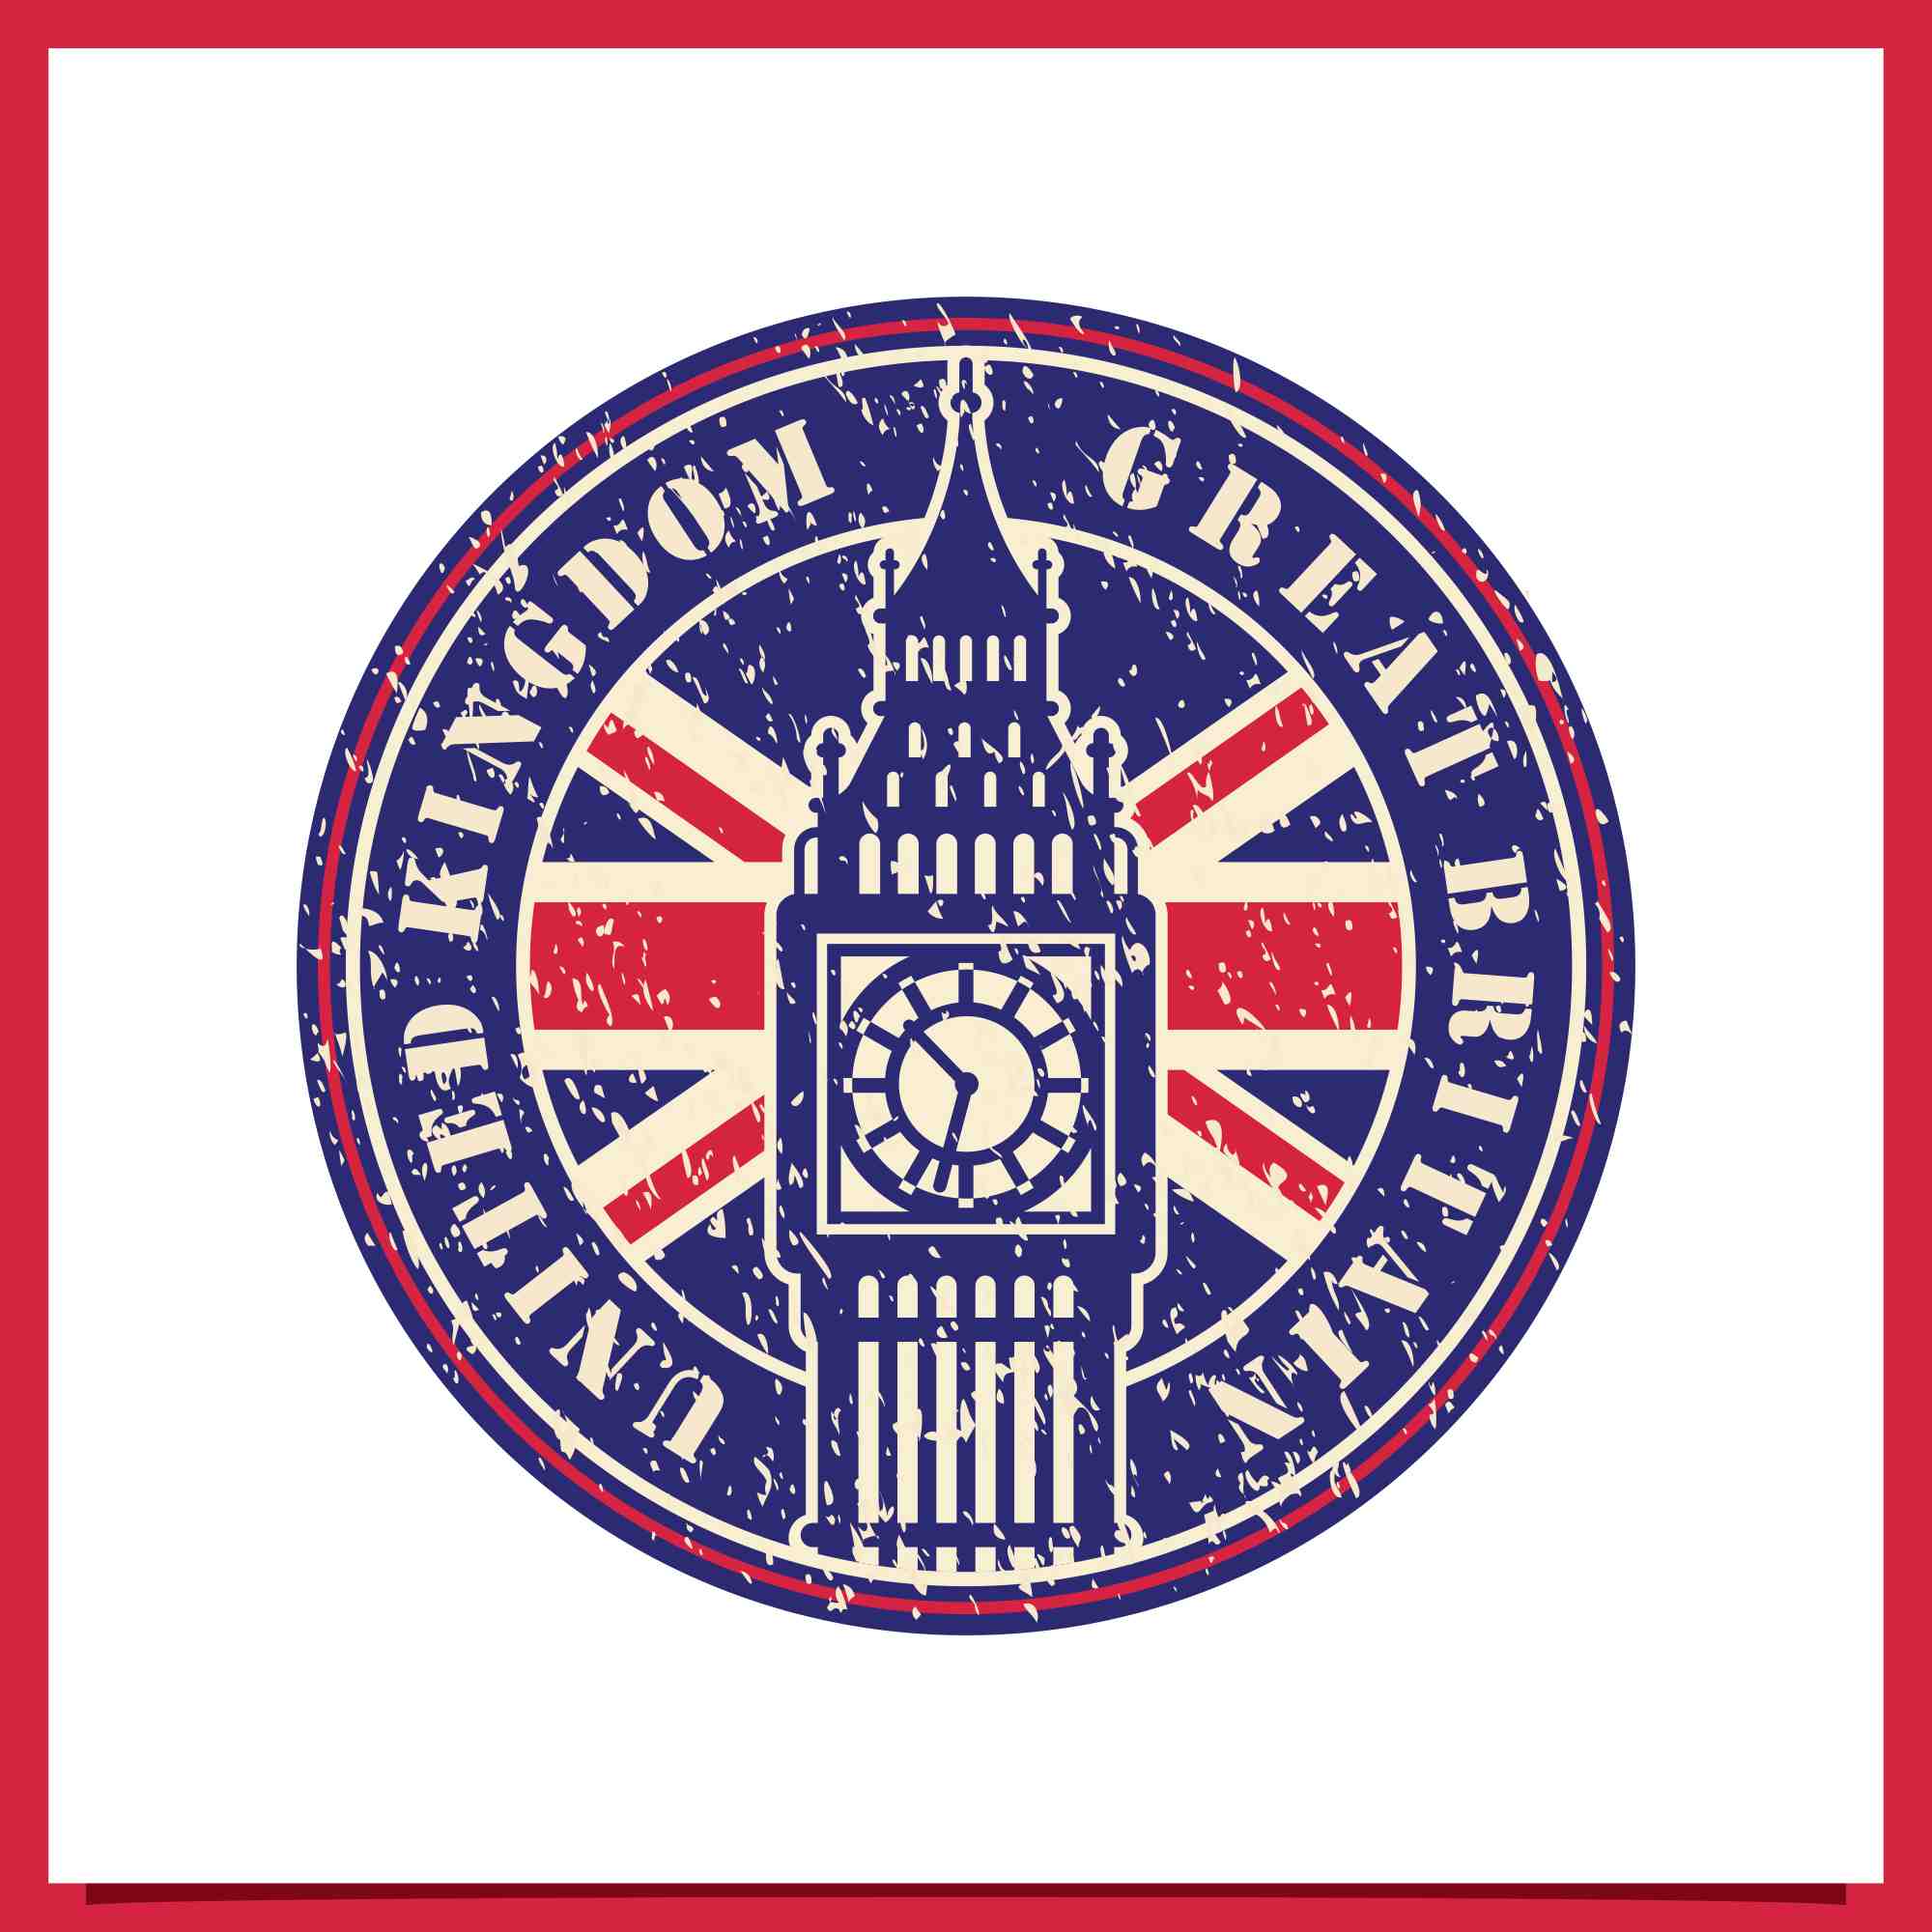 United kingdom great britania logo design - $4 preview image.